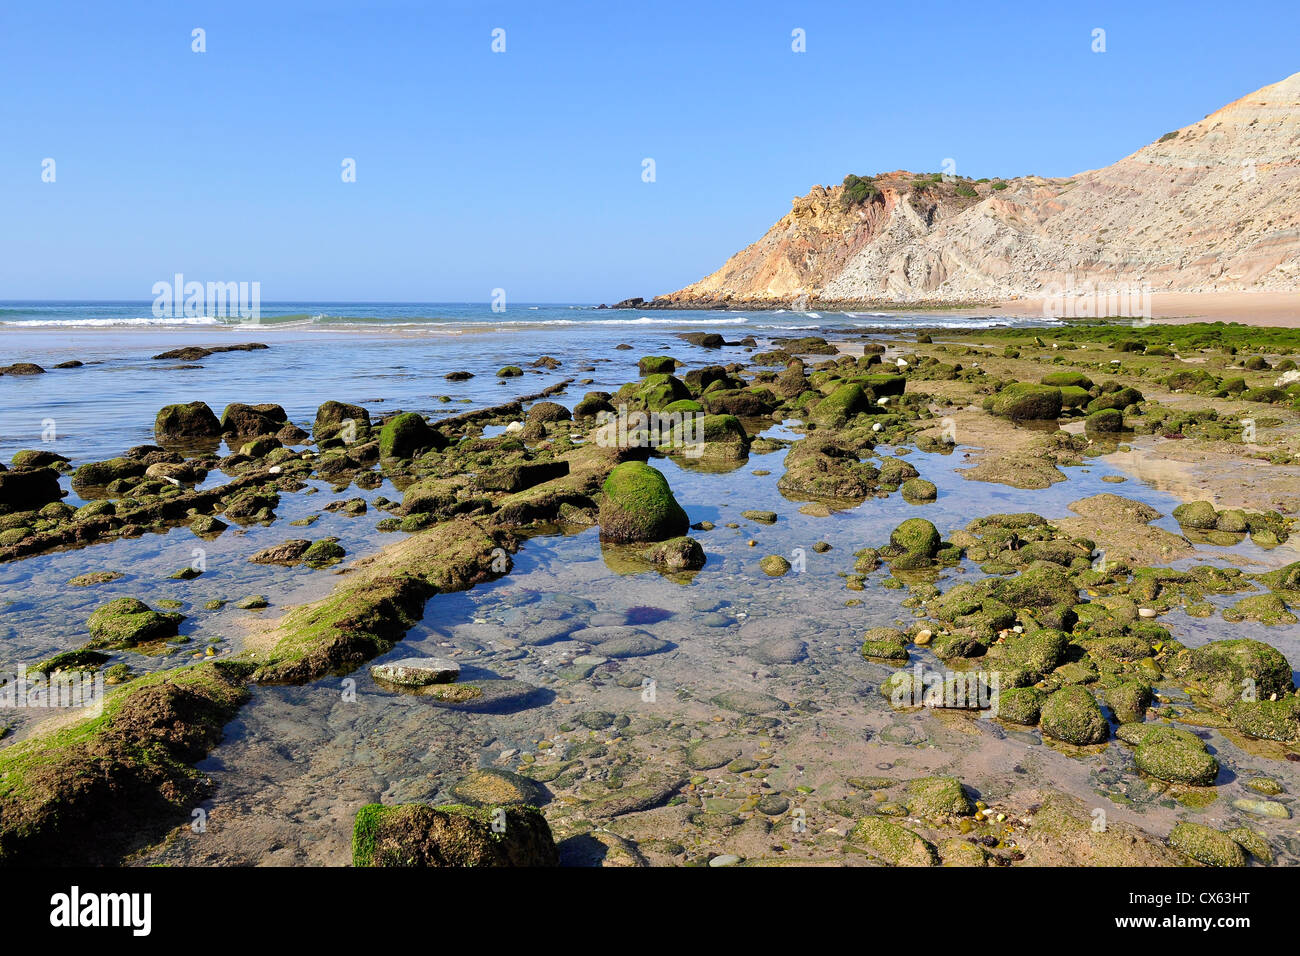 Burgau Beach near Lagos, Algarve, Portugal Stock Photo